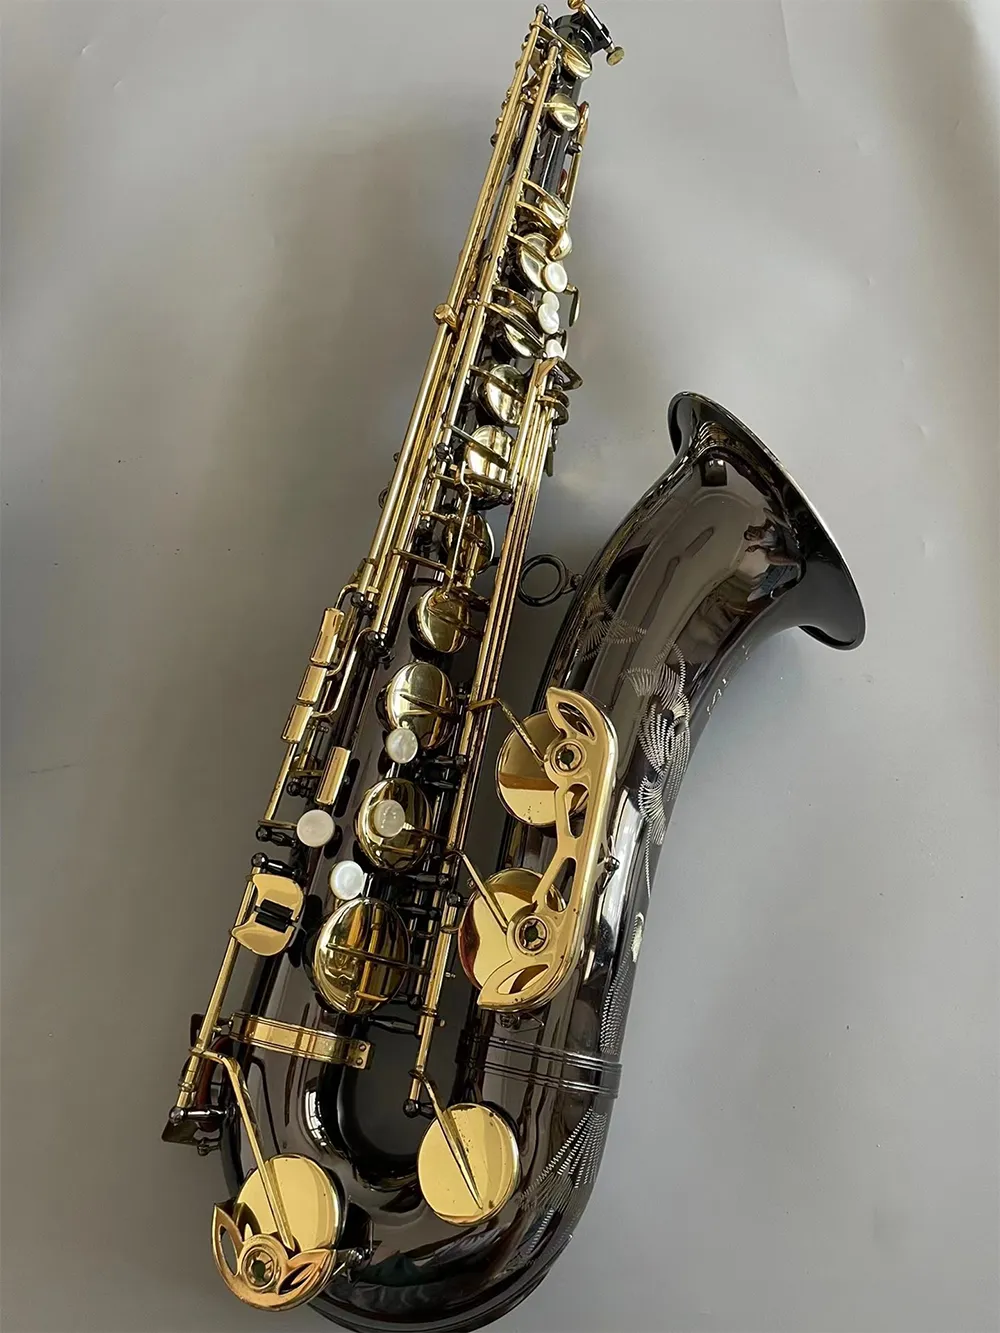 Black gold B-key professional tenor saxophone black nickel gold material professional-grade tone Tenor sax jazz instrument